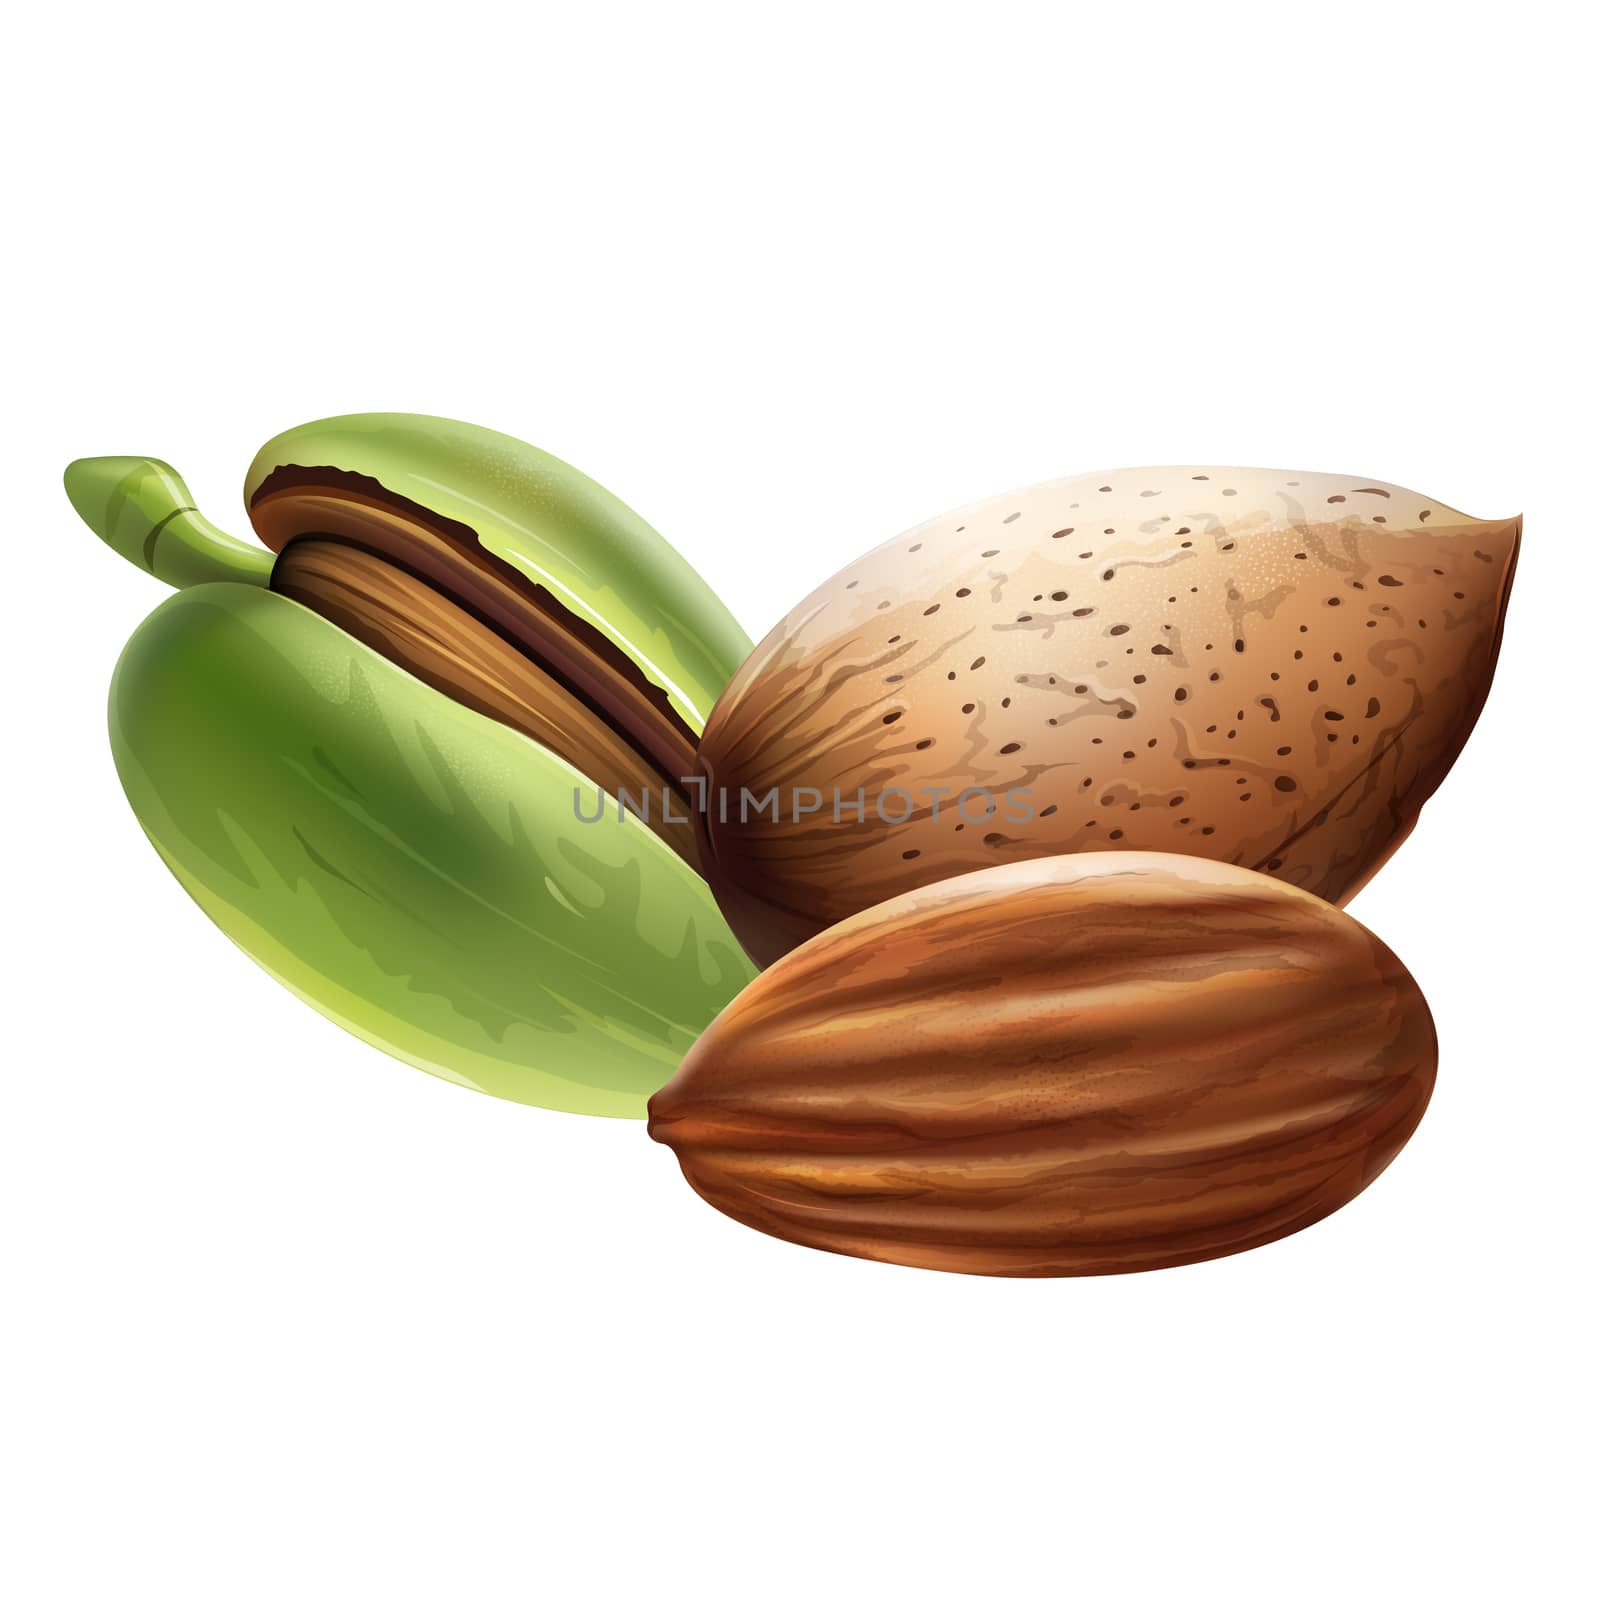 Almond isolated illustration on white background.